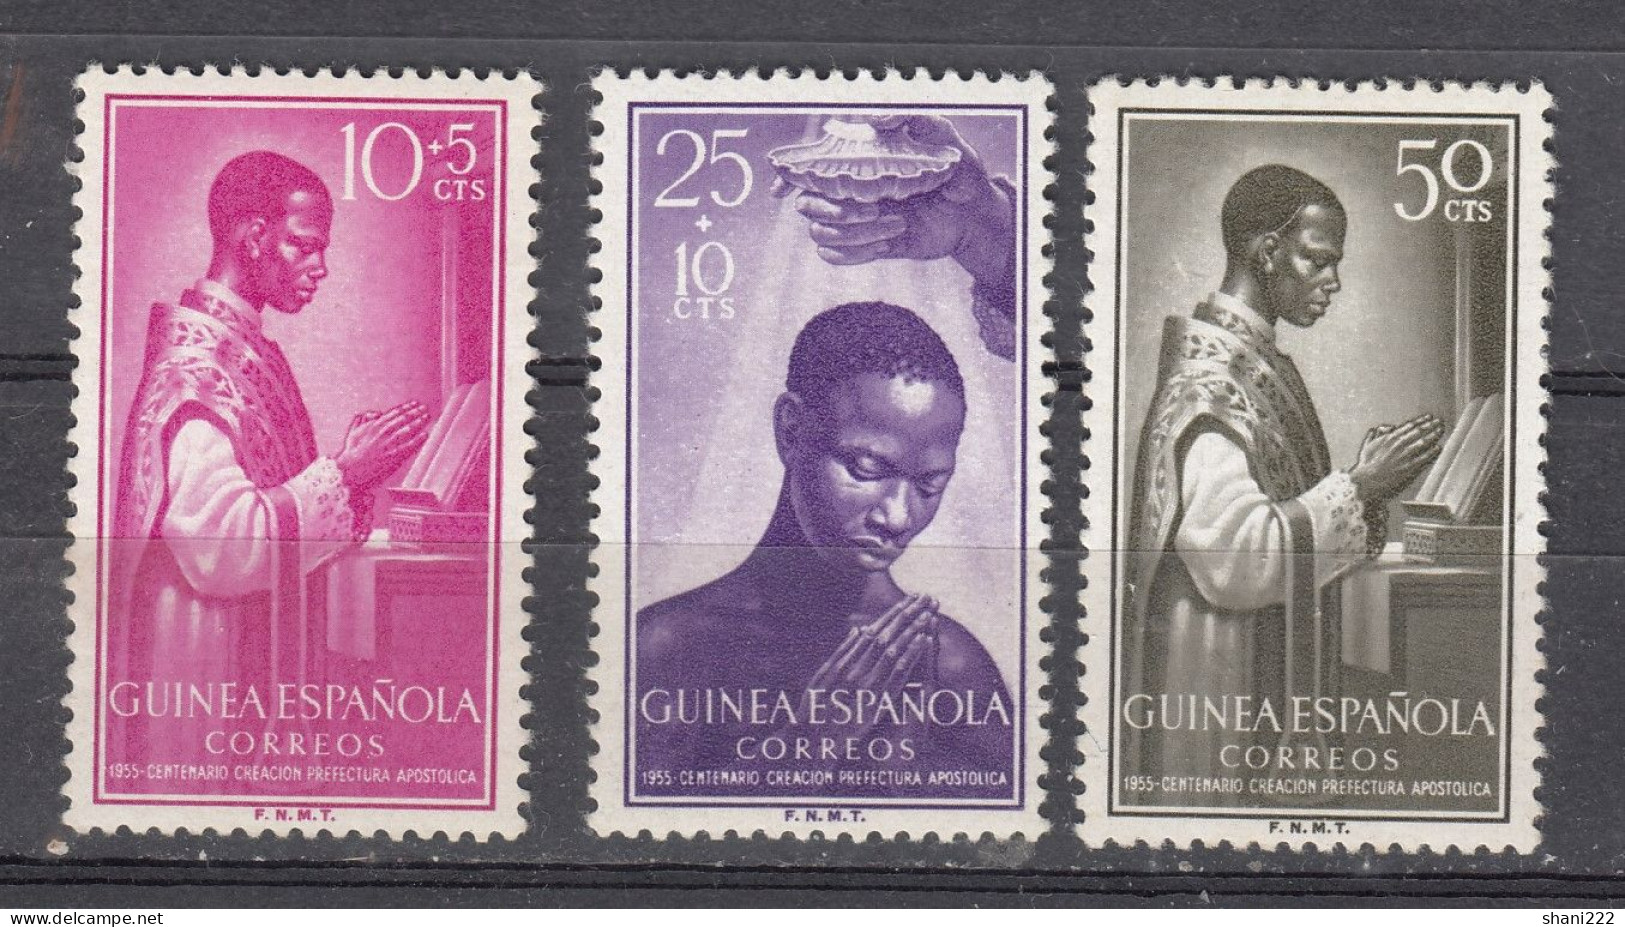 Spanish Guinea - 1955 Prefectura Apostolica - MNH (e-812) - Guinea Espagnole